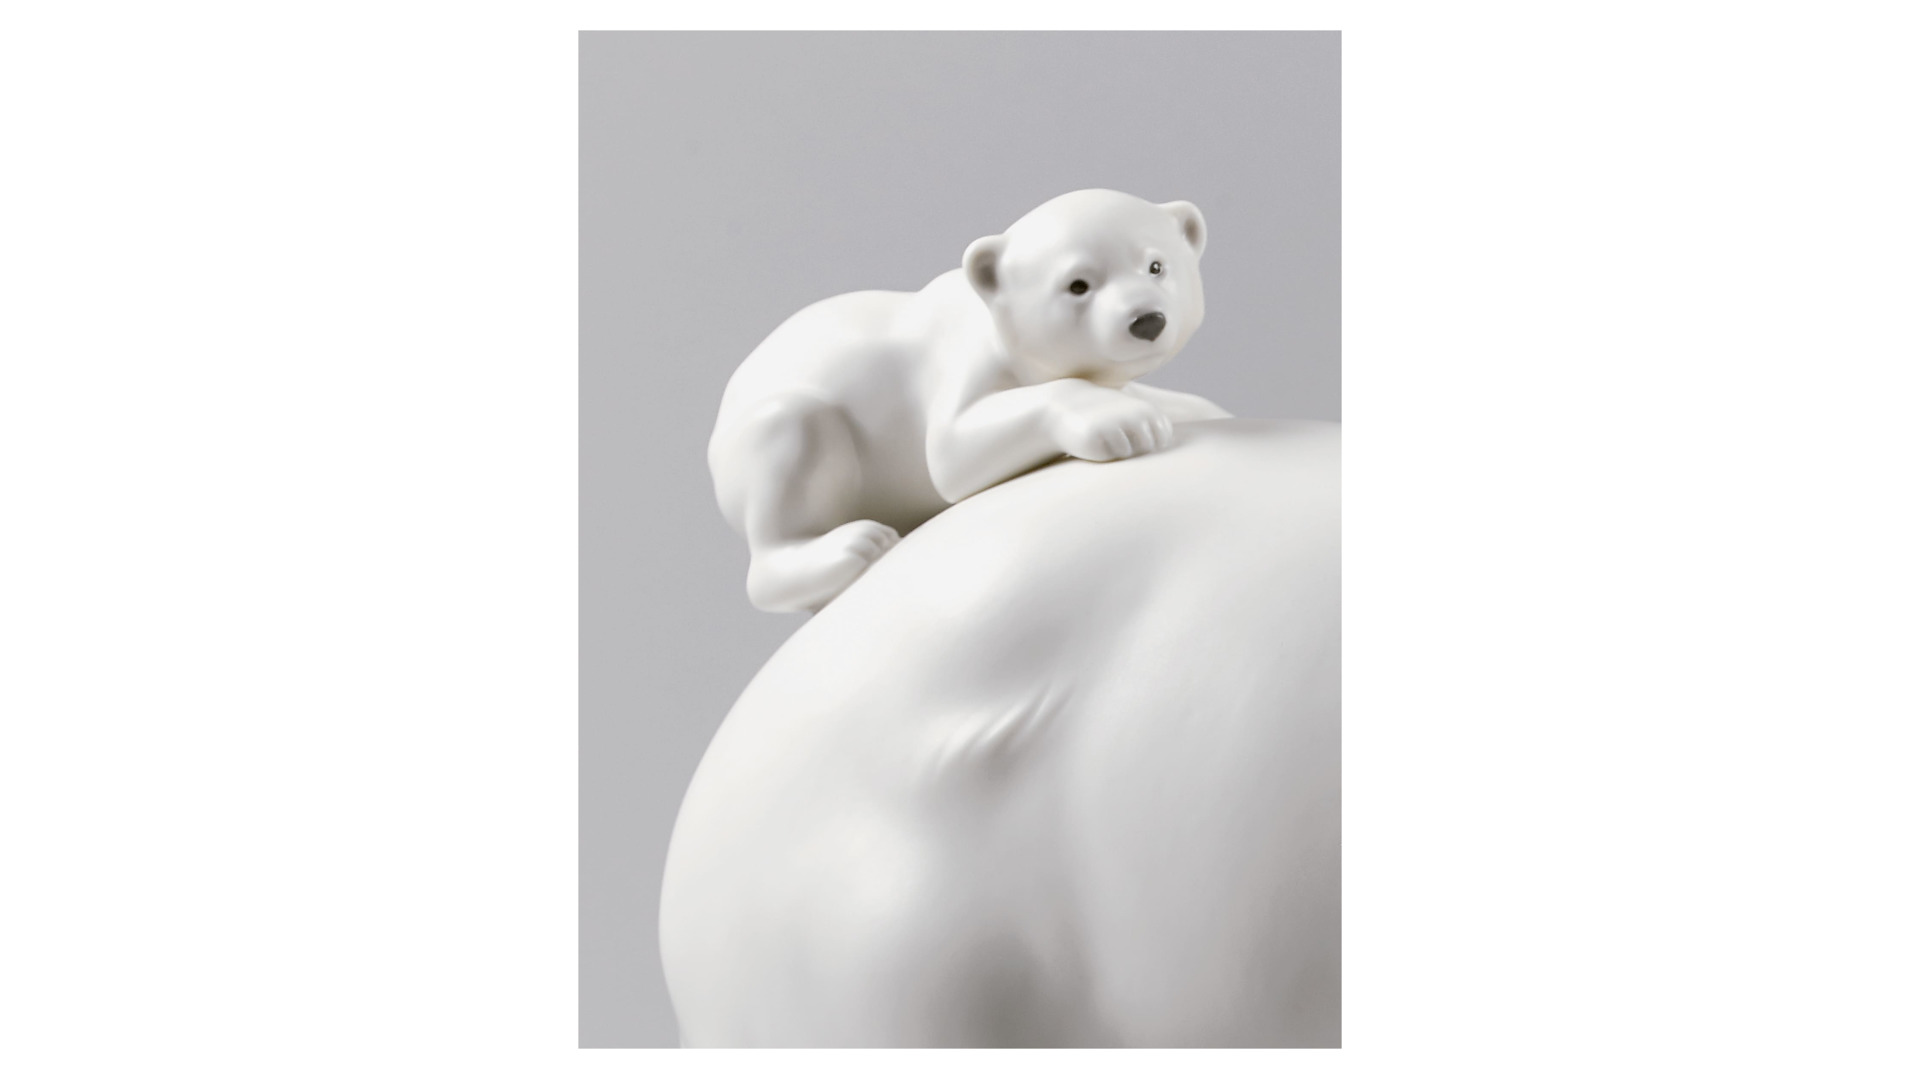 Фигурка Lladro Медведица с медвежатами 39х25 см, фарфор